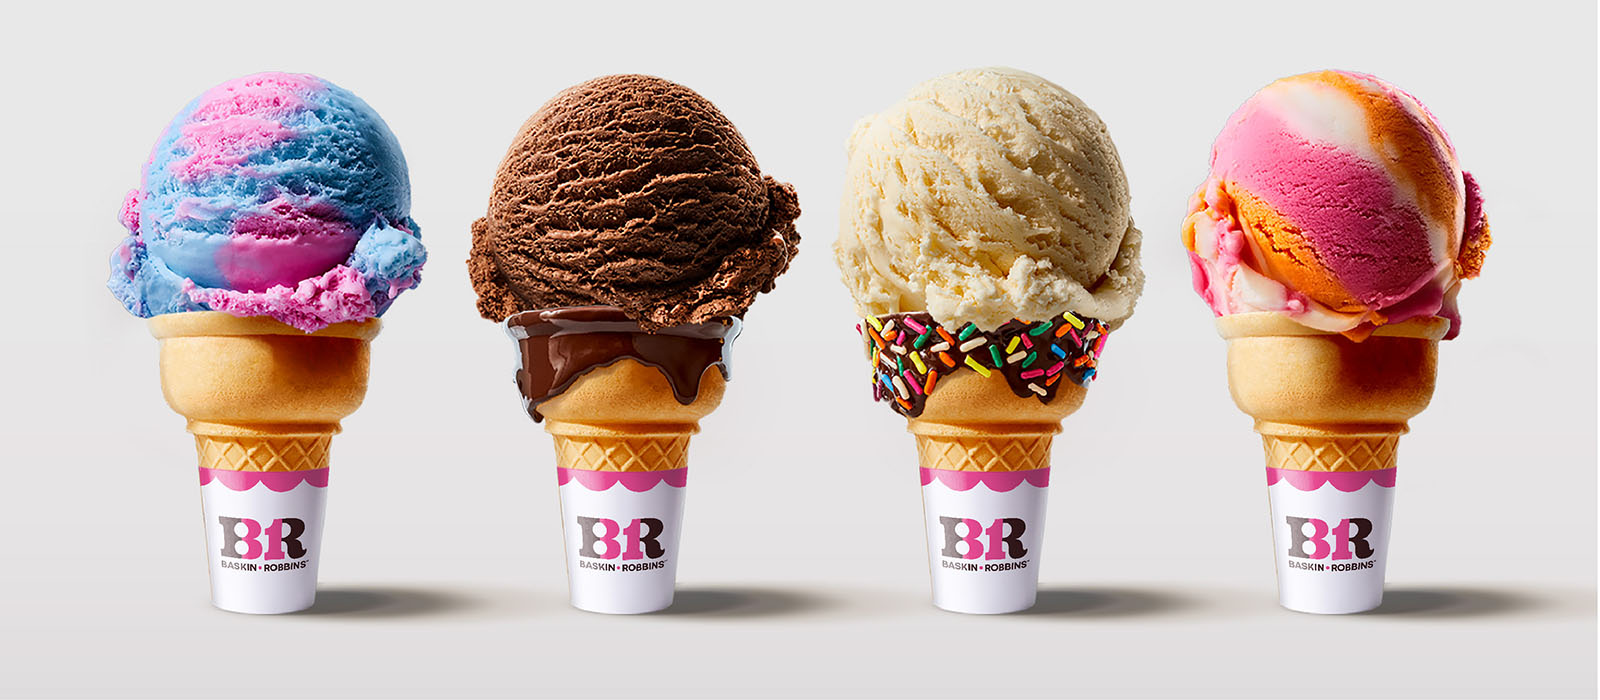 Baskin-Robbins cones with new branding